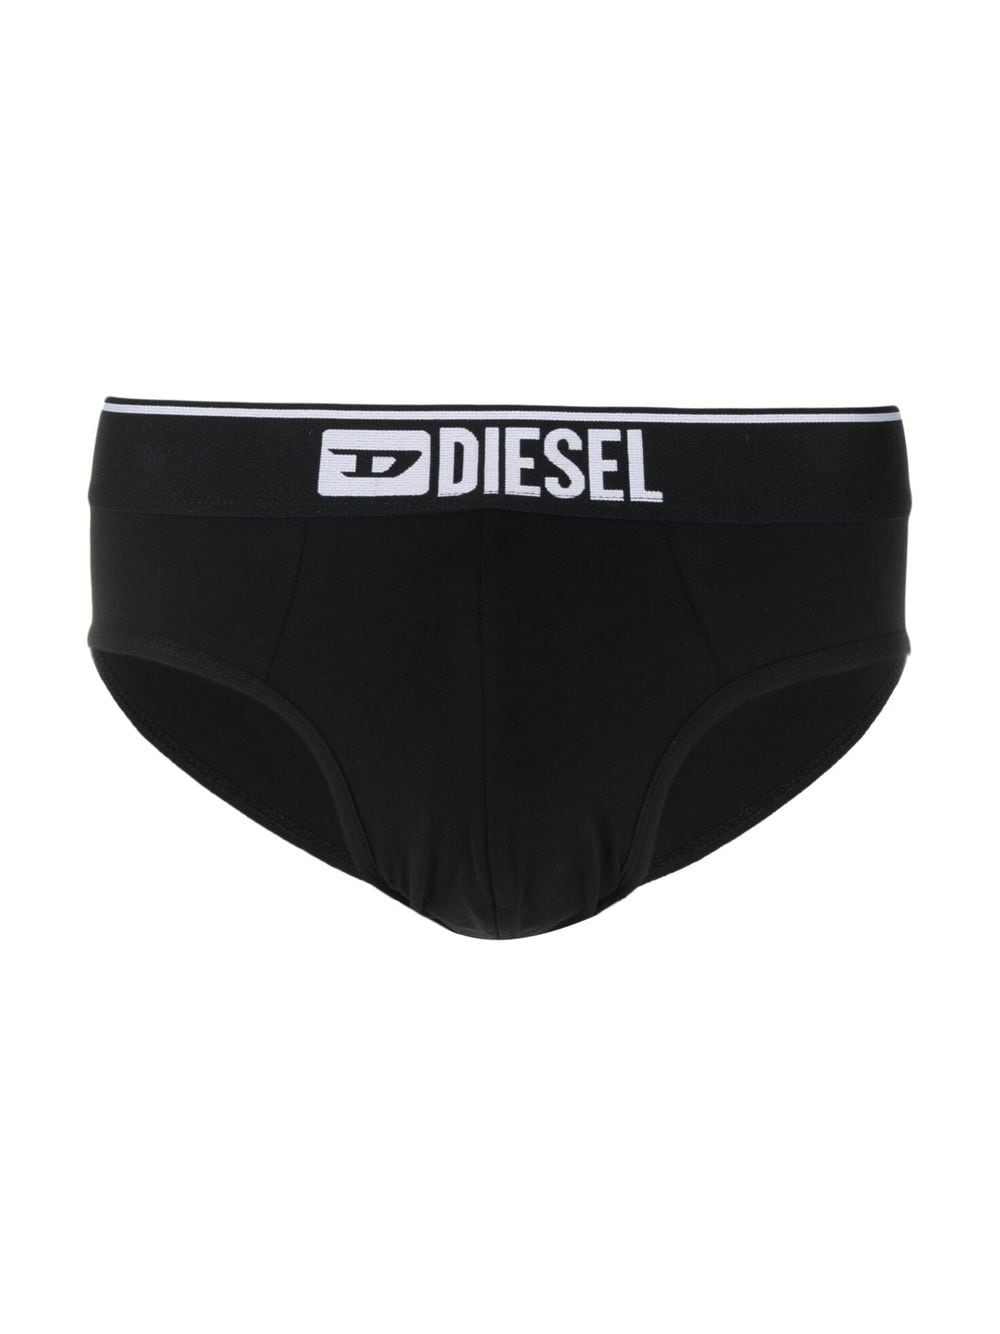 Image 2 of Diesel Umbr-Andre briefs (pack of three)